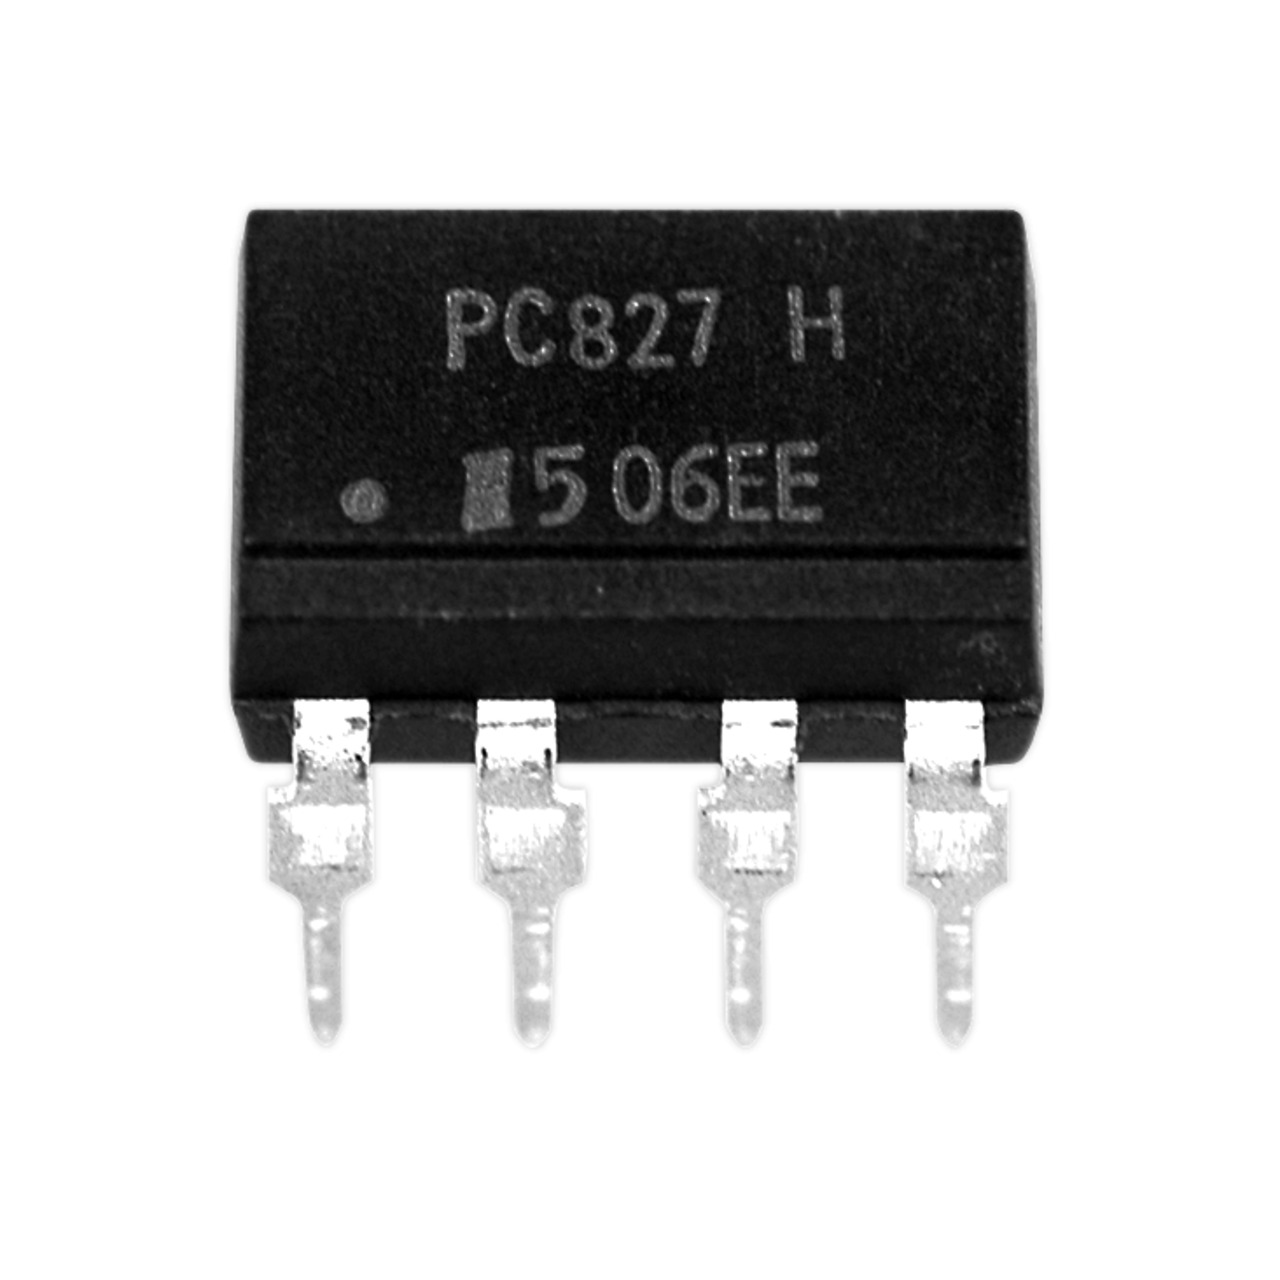 Hero 2-facher DC-Optokoppler PC829H- 35 V- 50 mA- DIP8 unter Komponenten